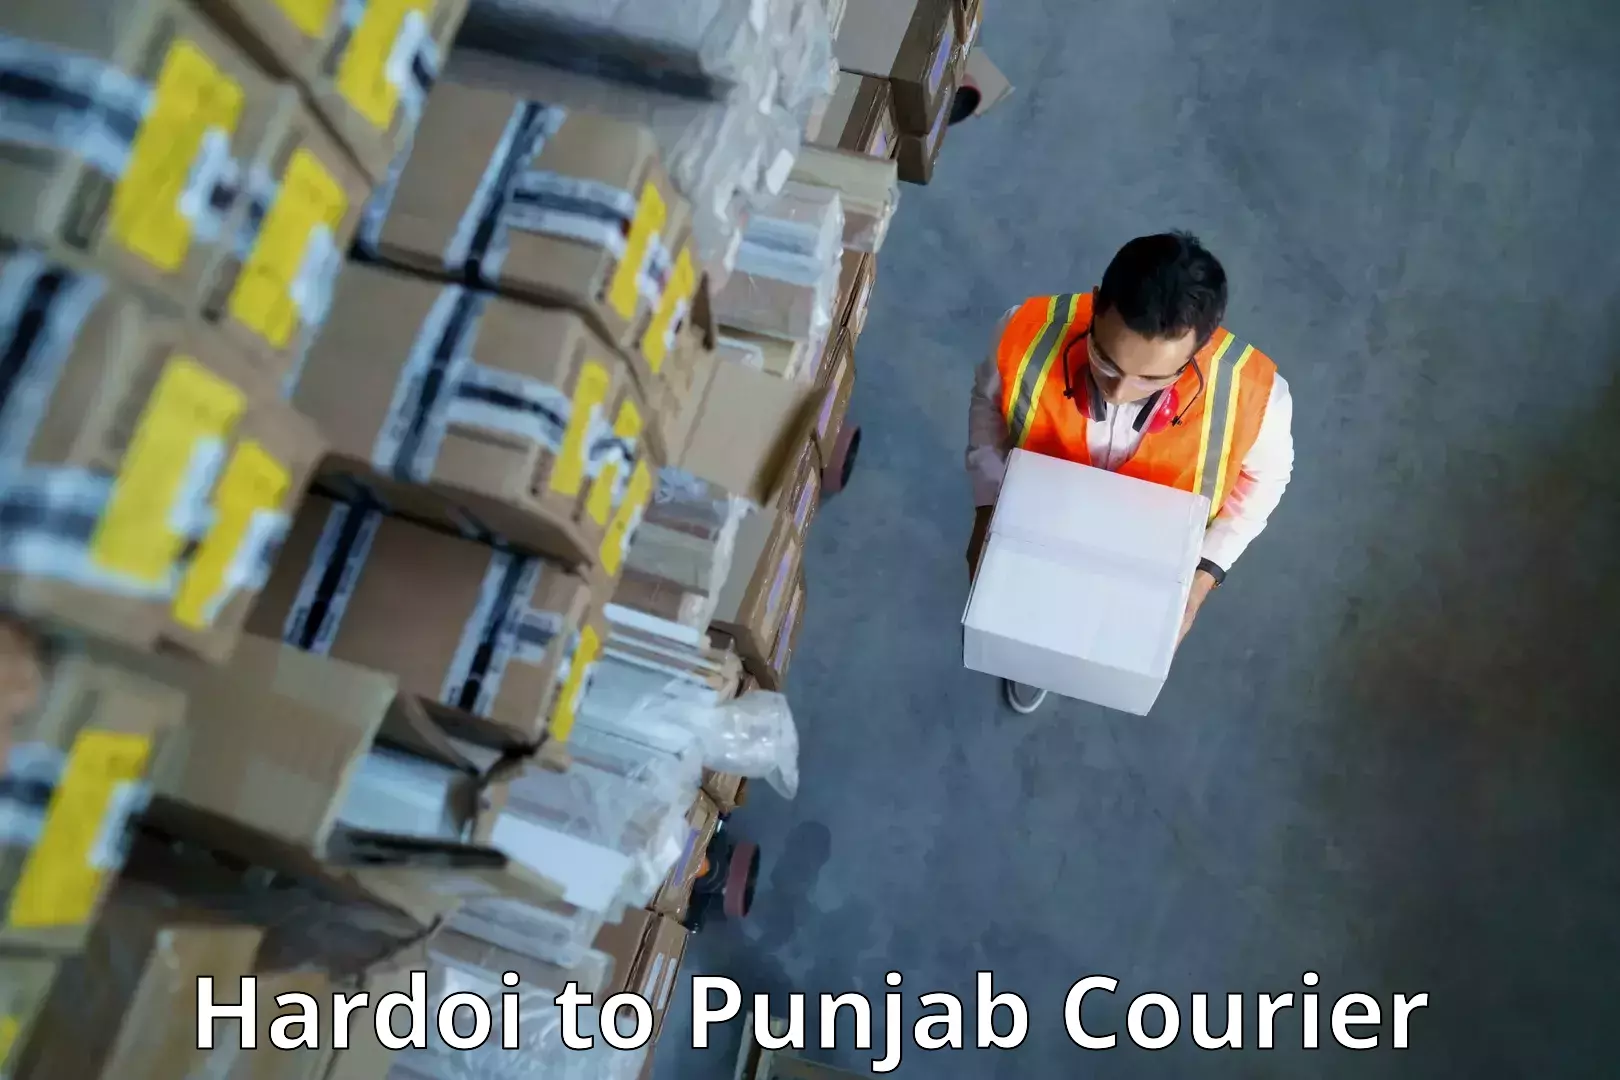 Professional courier handling Hardoi to Nawanshahr